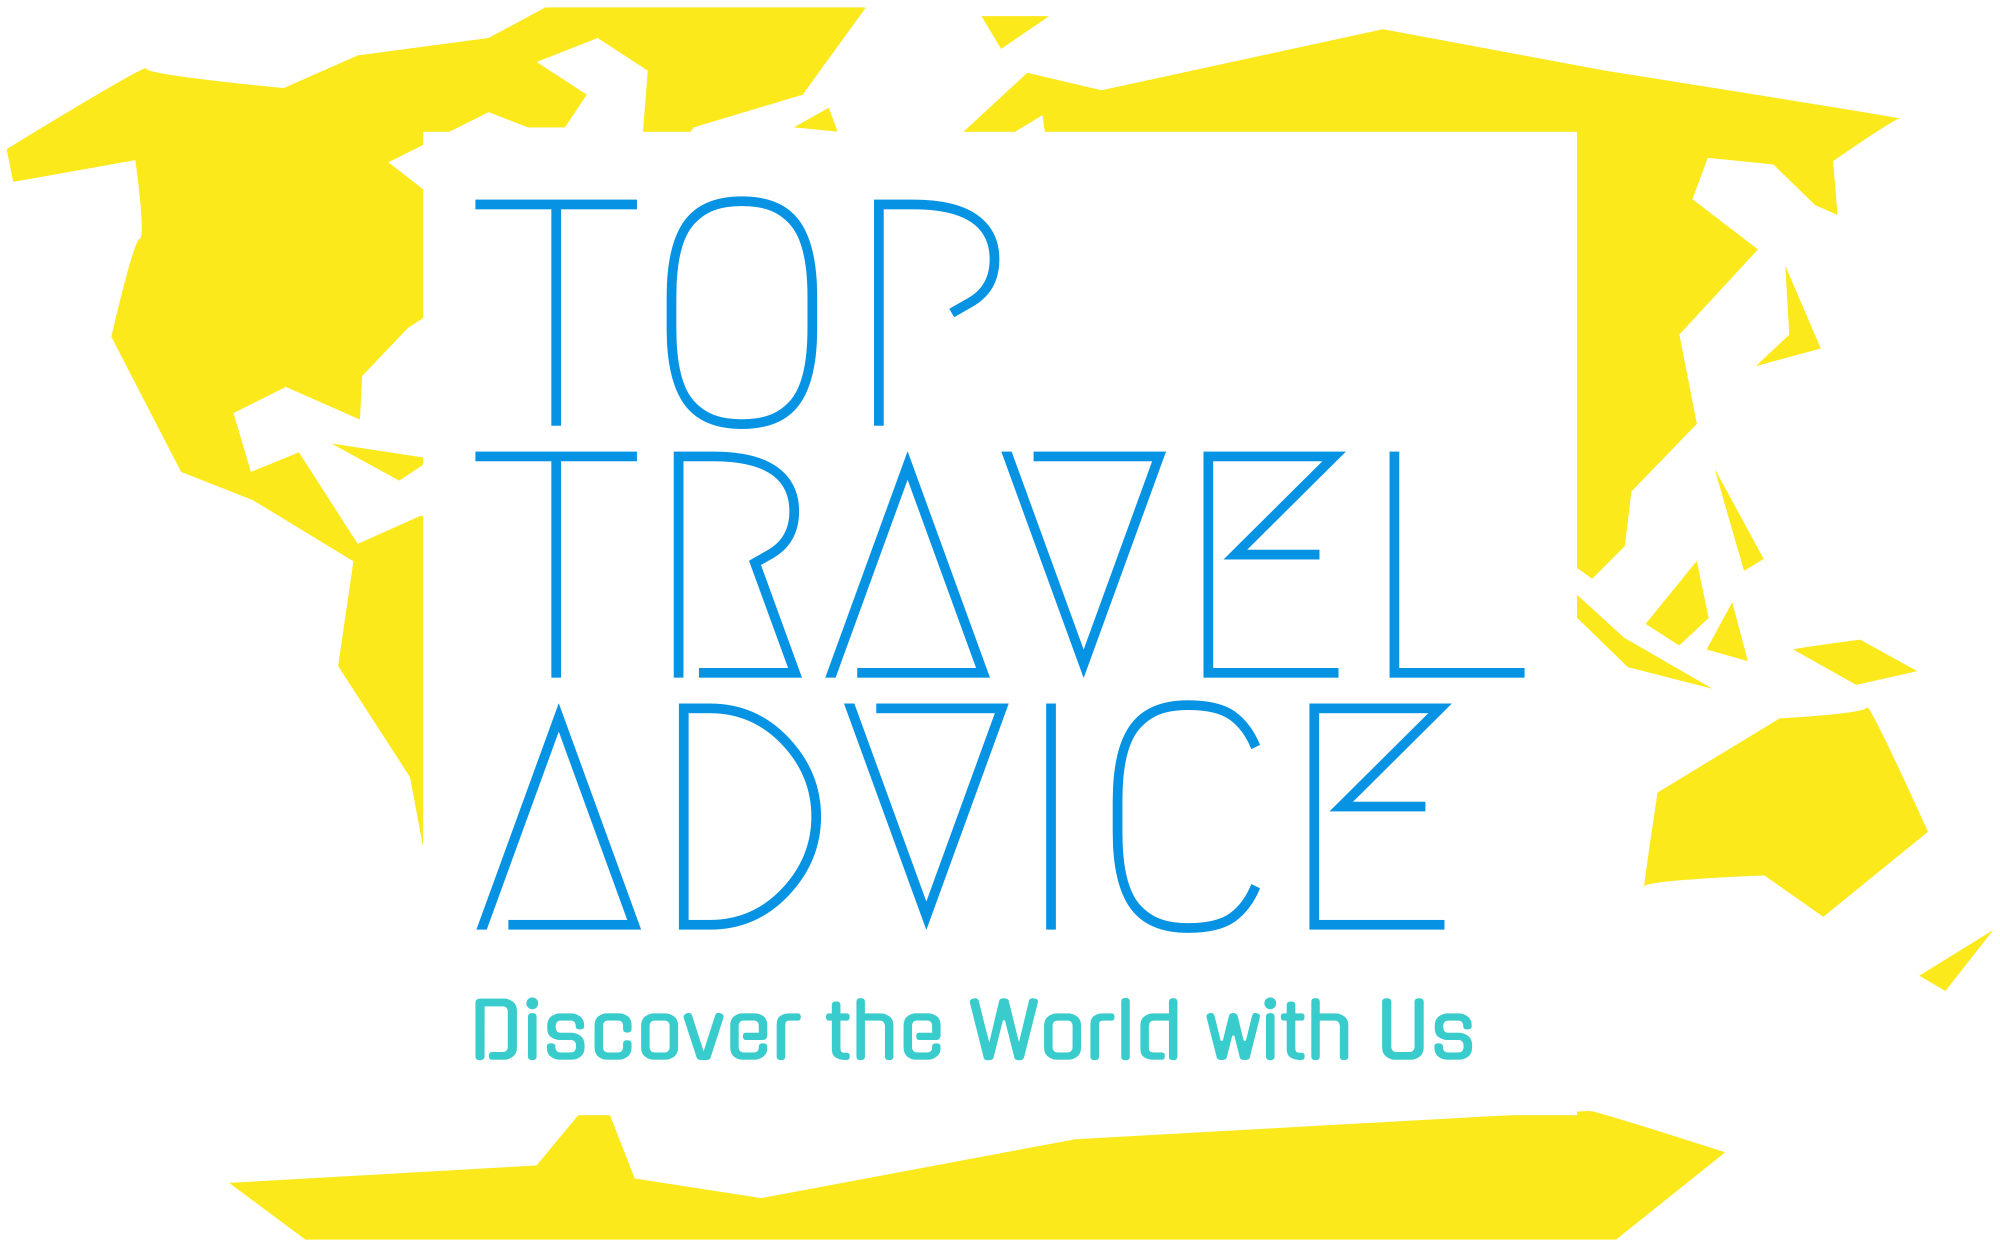 Top Travel Advice